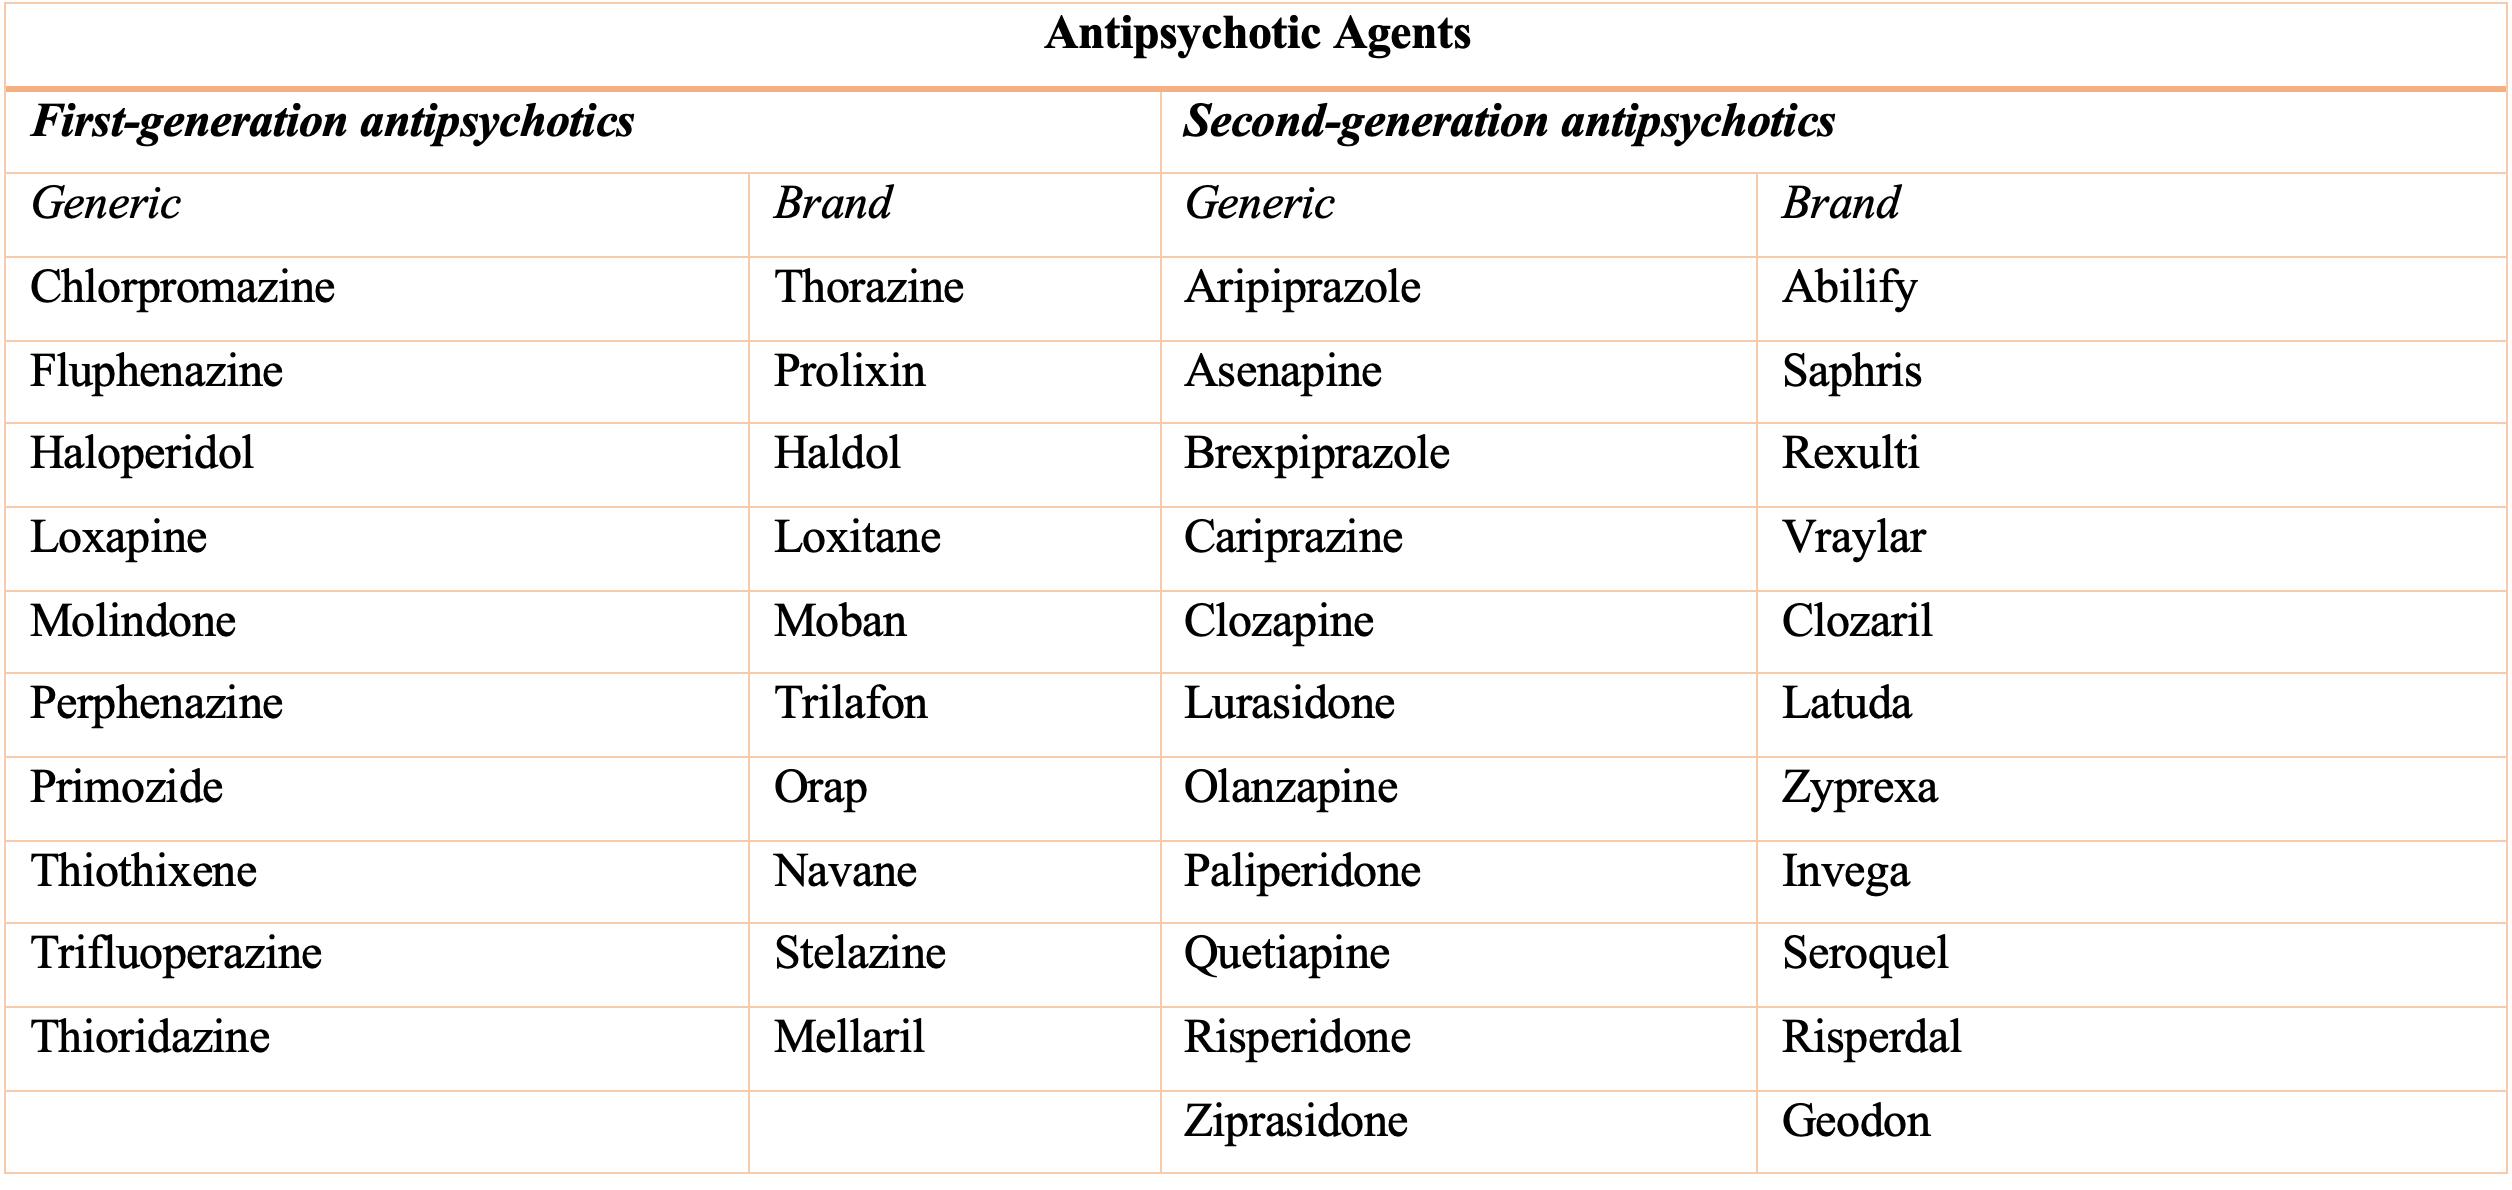 Table 3: Antipsychotics